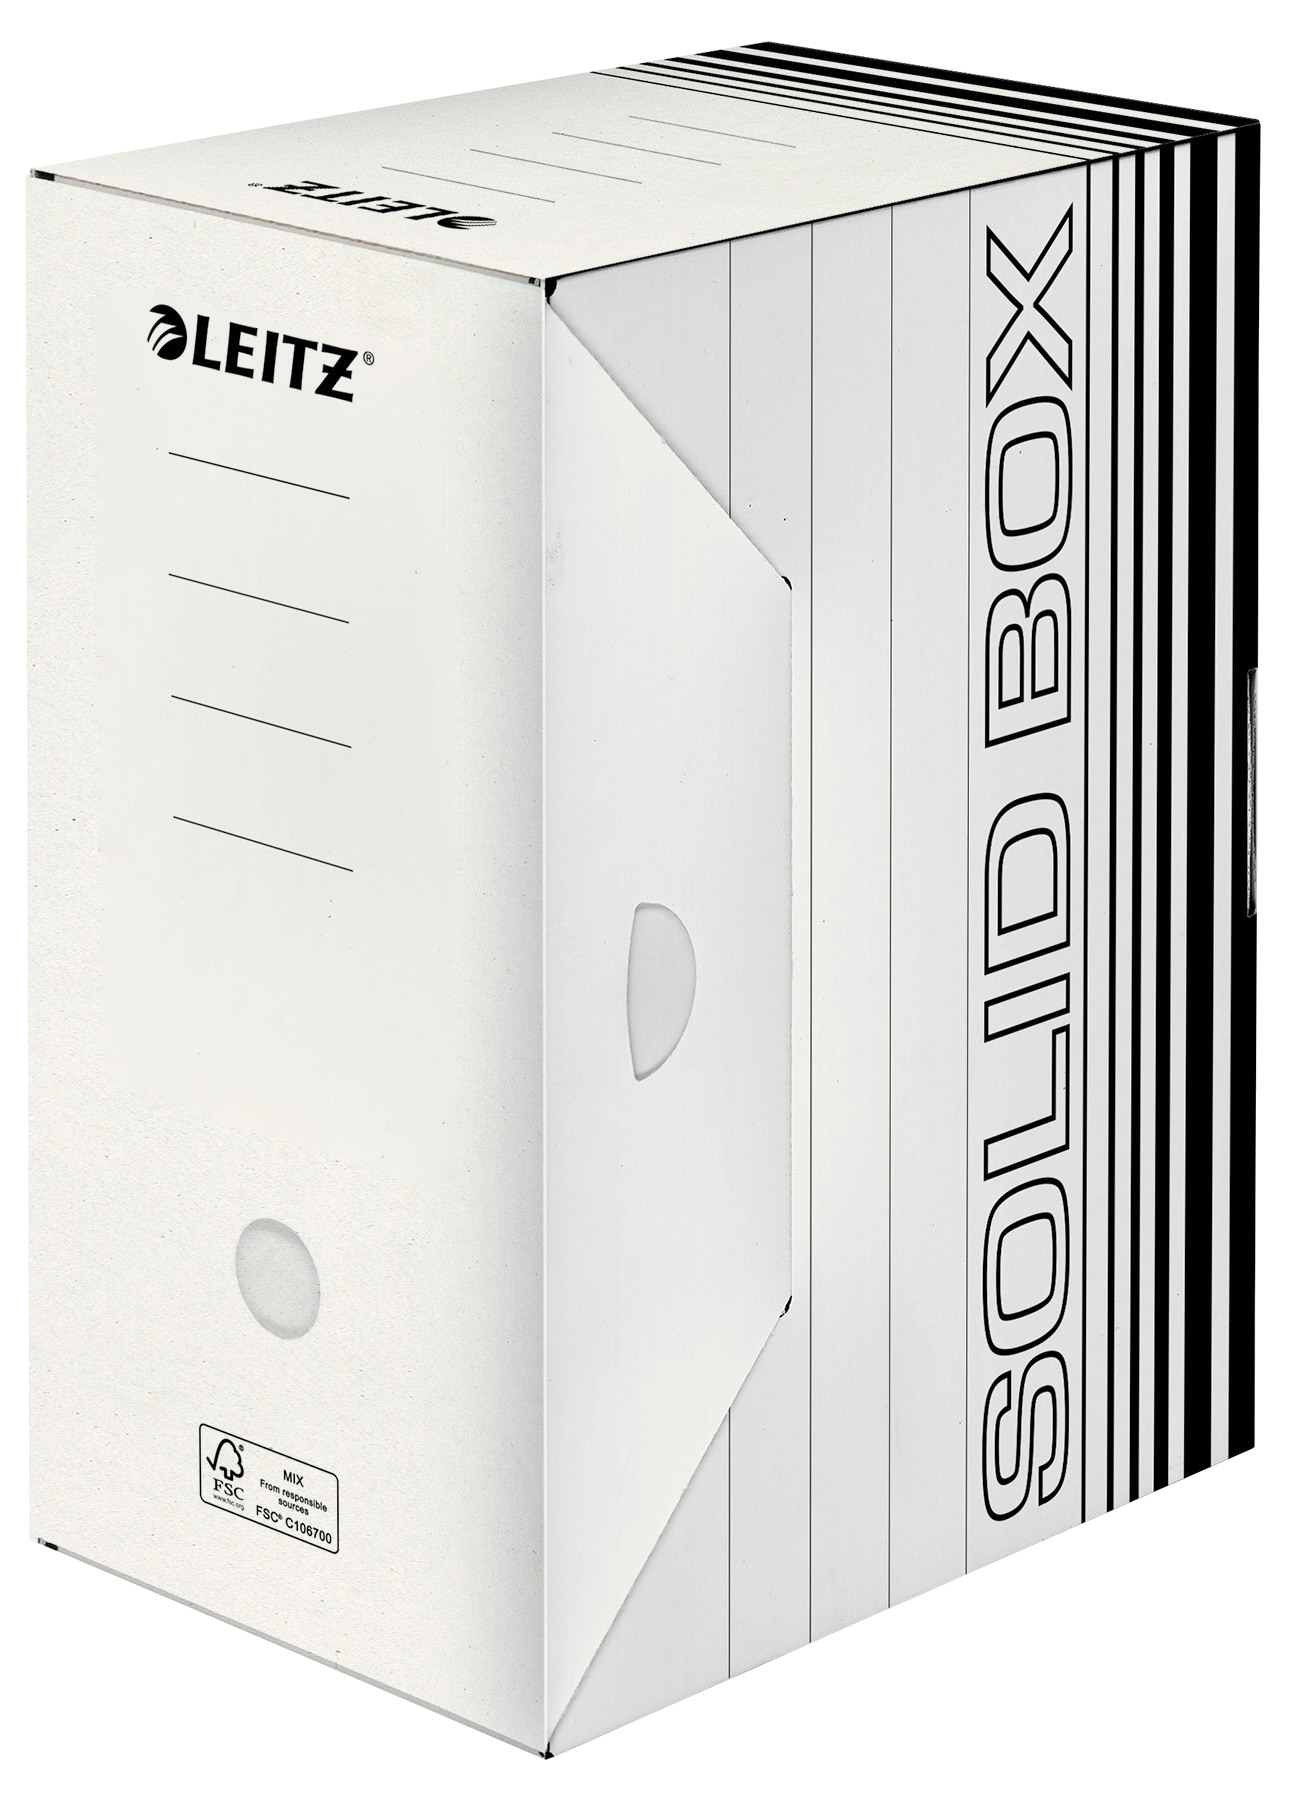 LEITZ Boîte archive Solid A4 6129-00-01 blanc